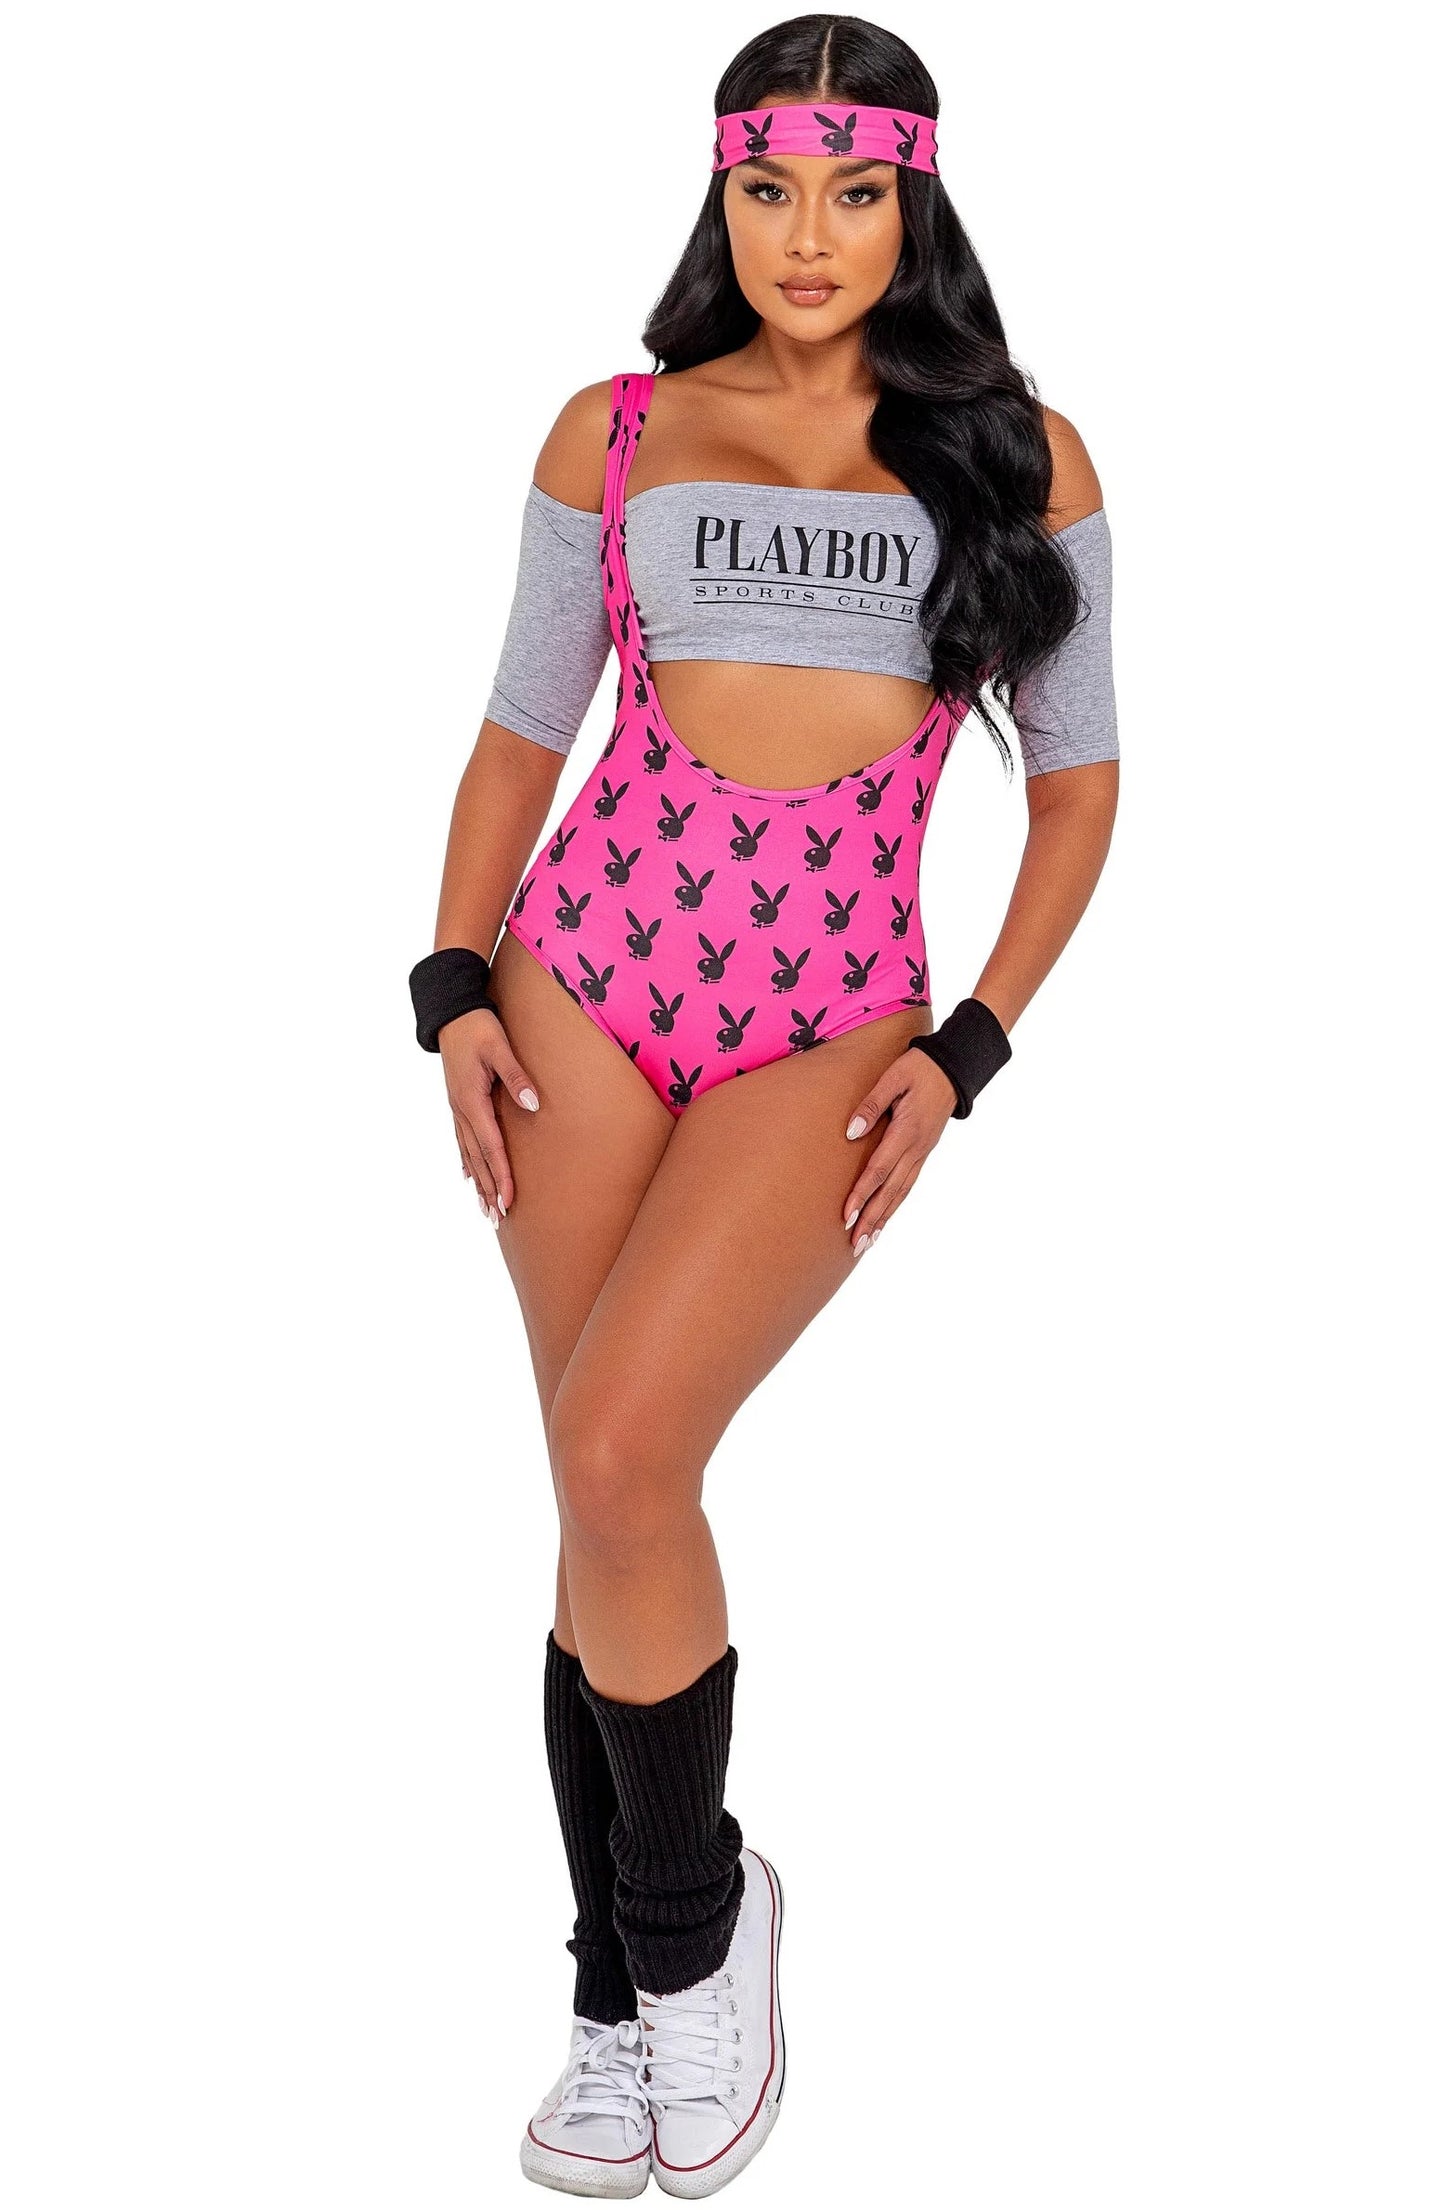 Playboy retro physical costume